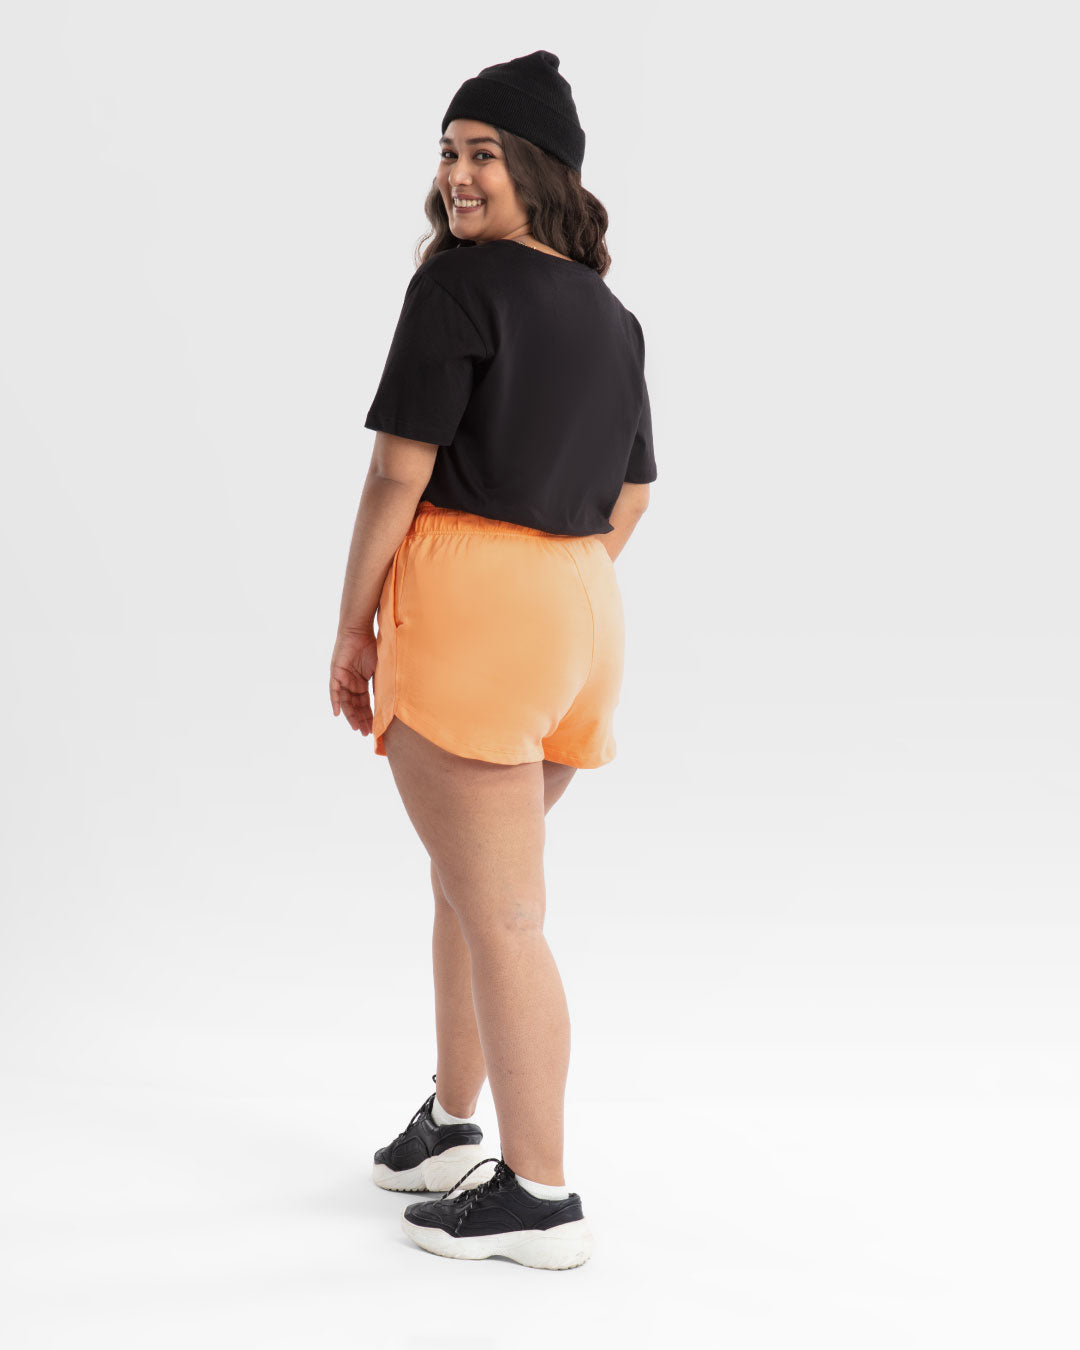 Women's Short Sweatpants 2.0